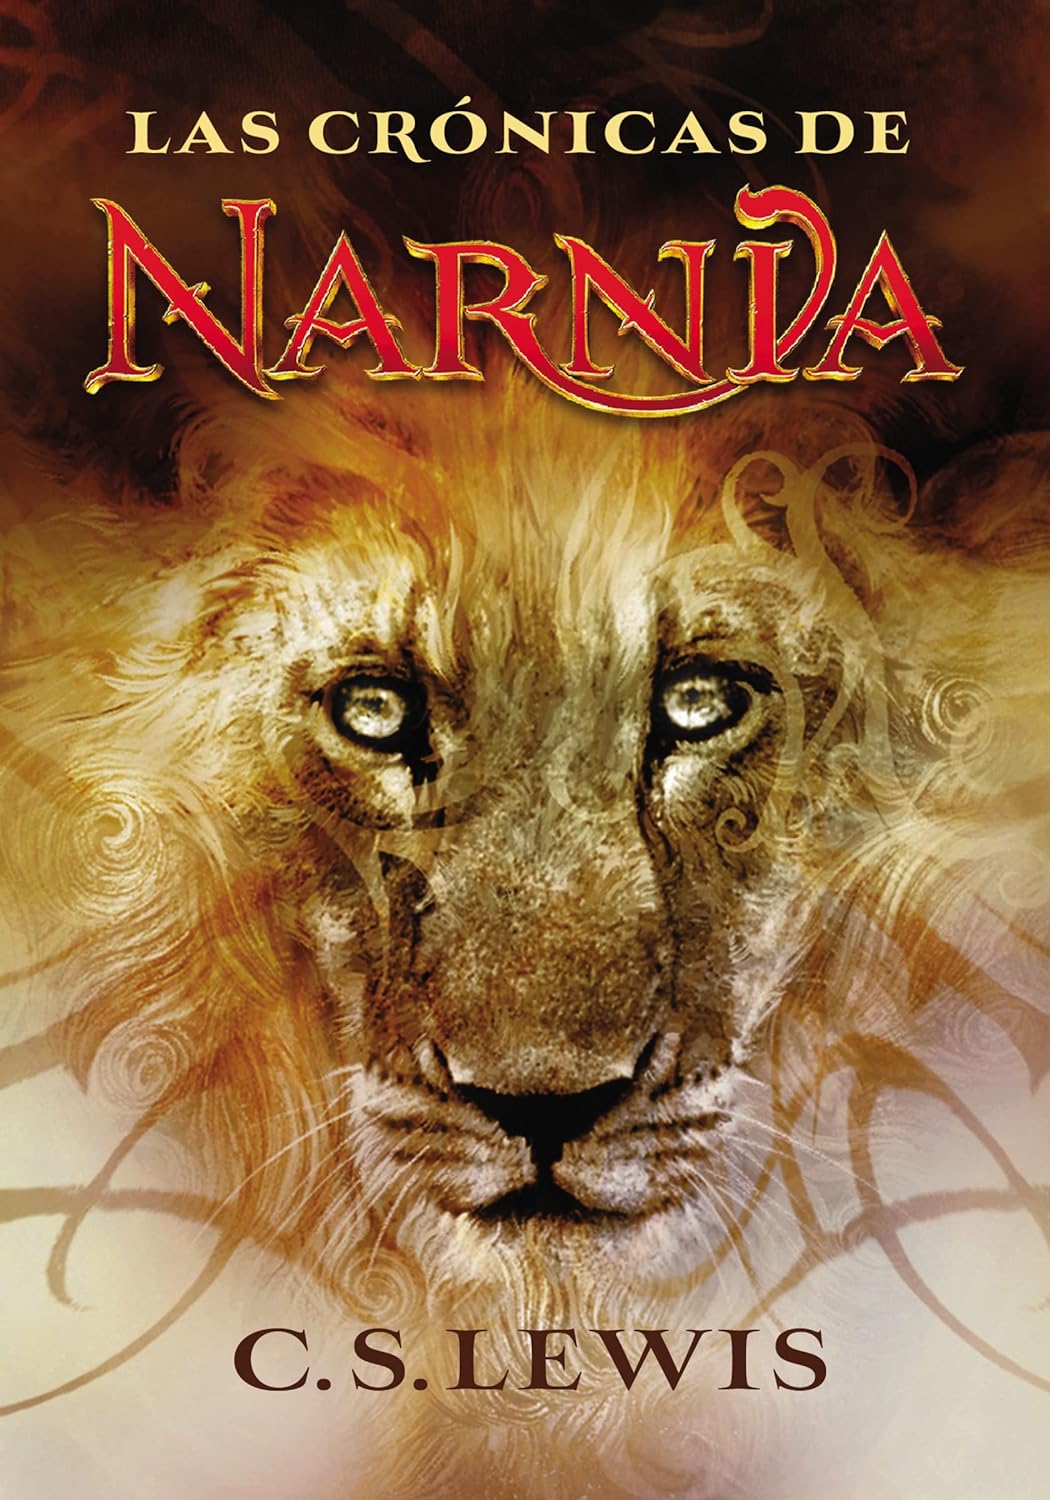 Cronicas de Narnia siete libros en uno